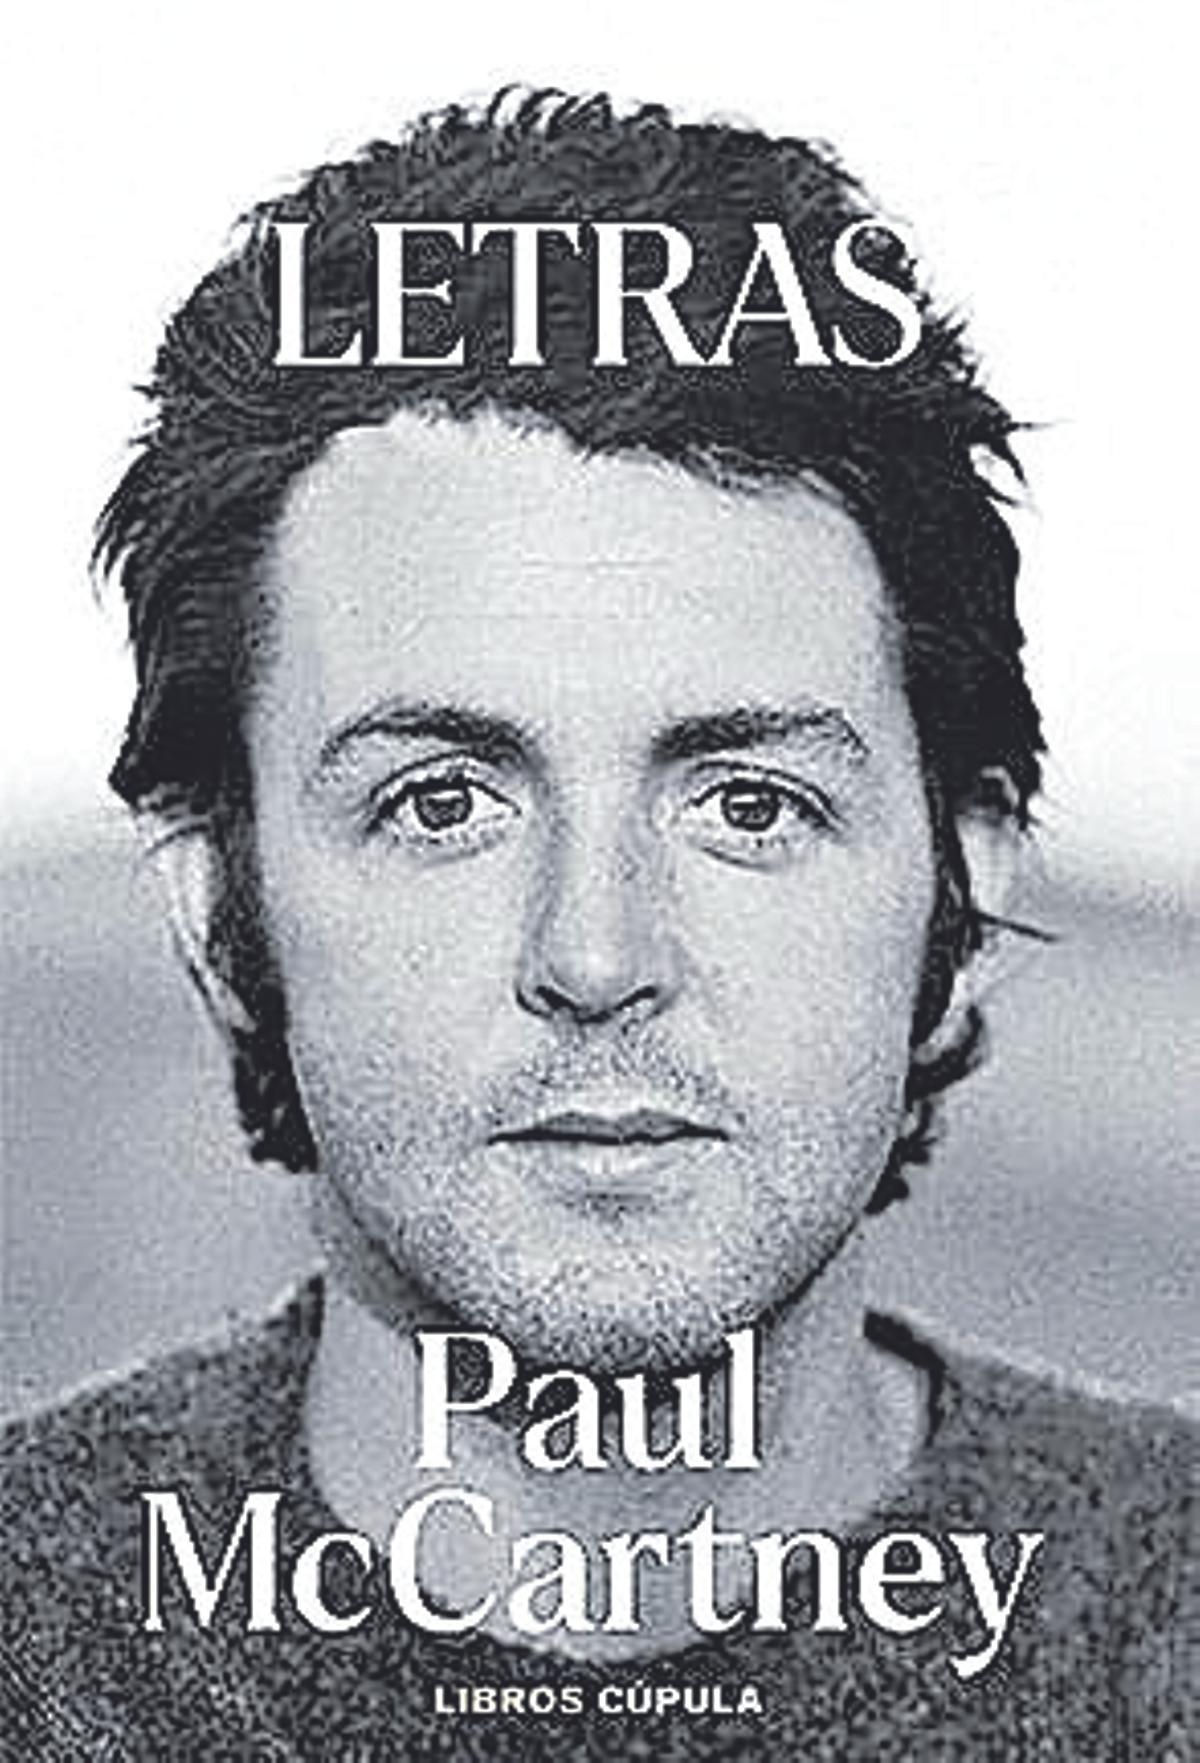 Paul McCartney  Letras   Traducción de Eva Raventós  Libros Cúpula   624 páginas / 32,95 euros